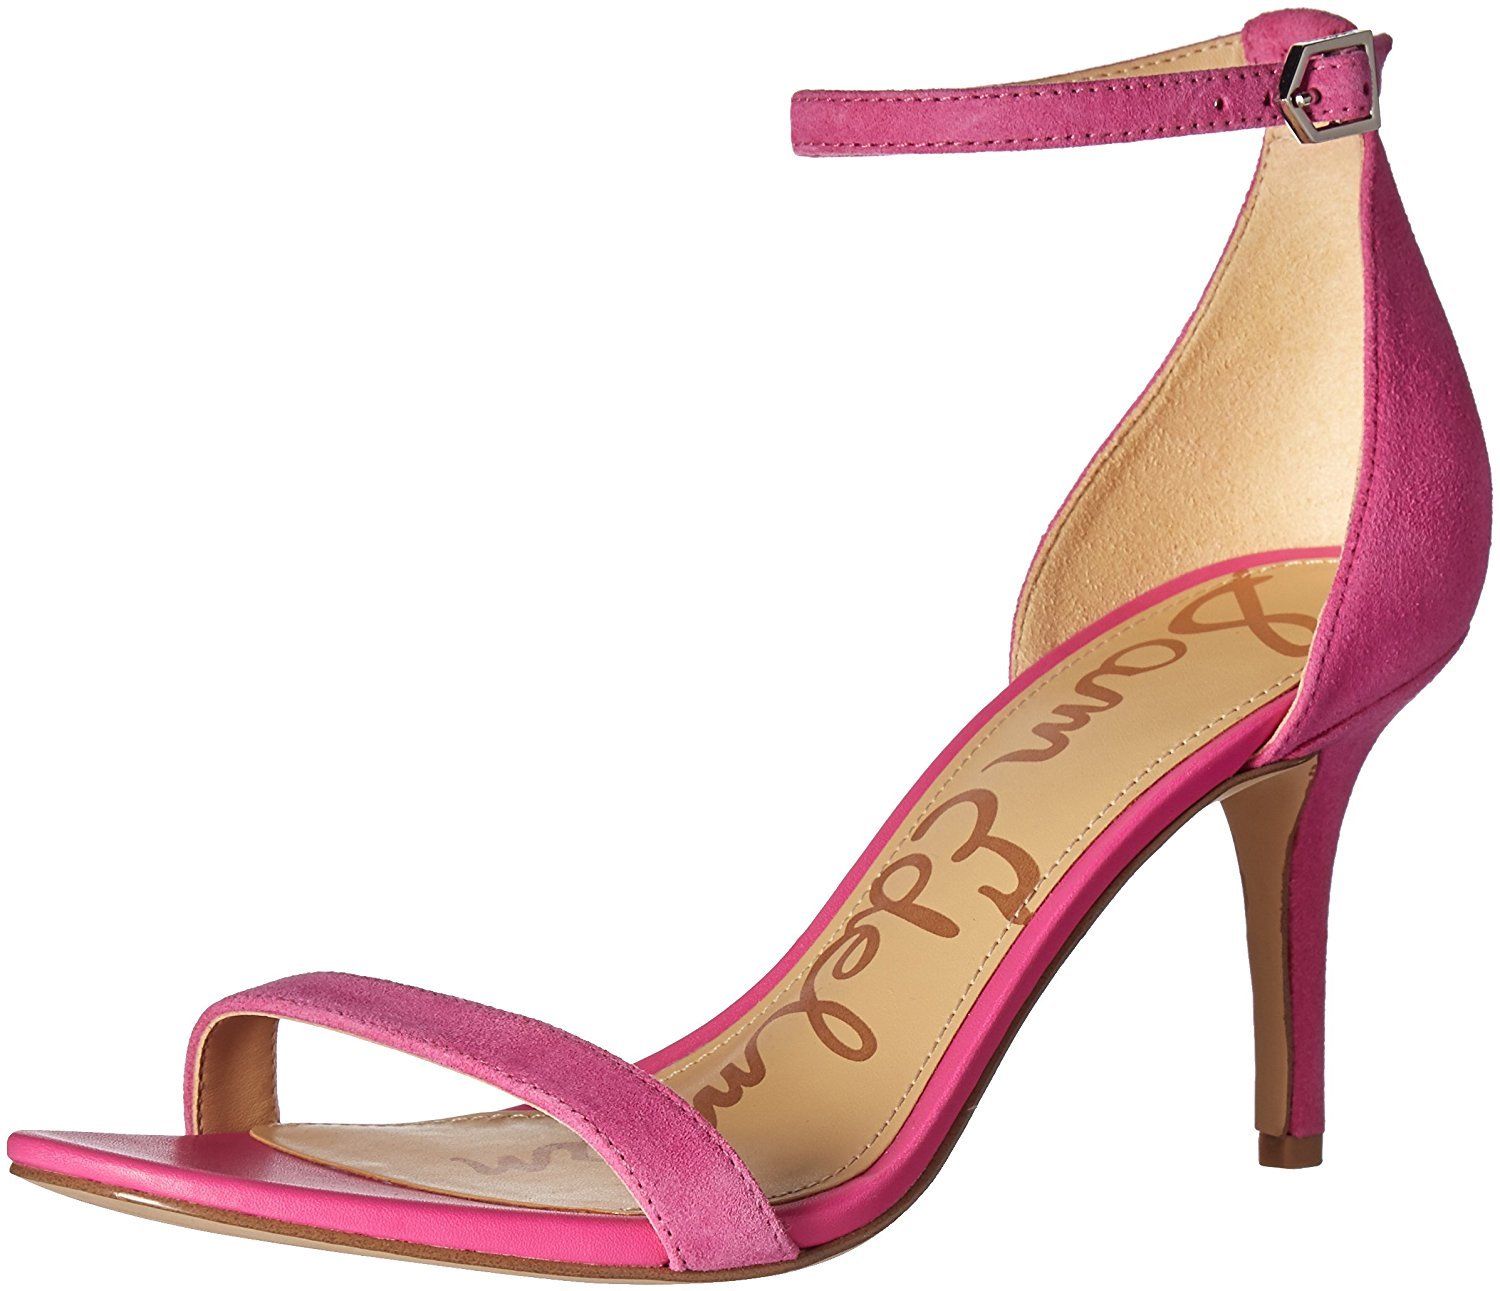 Buy > sam edelman satin heels > in stock